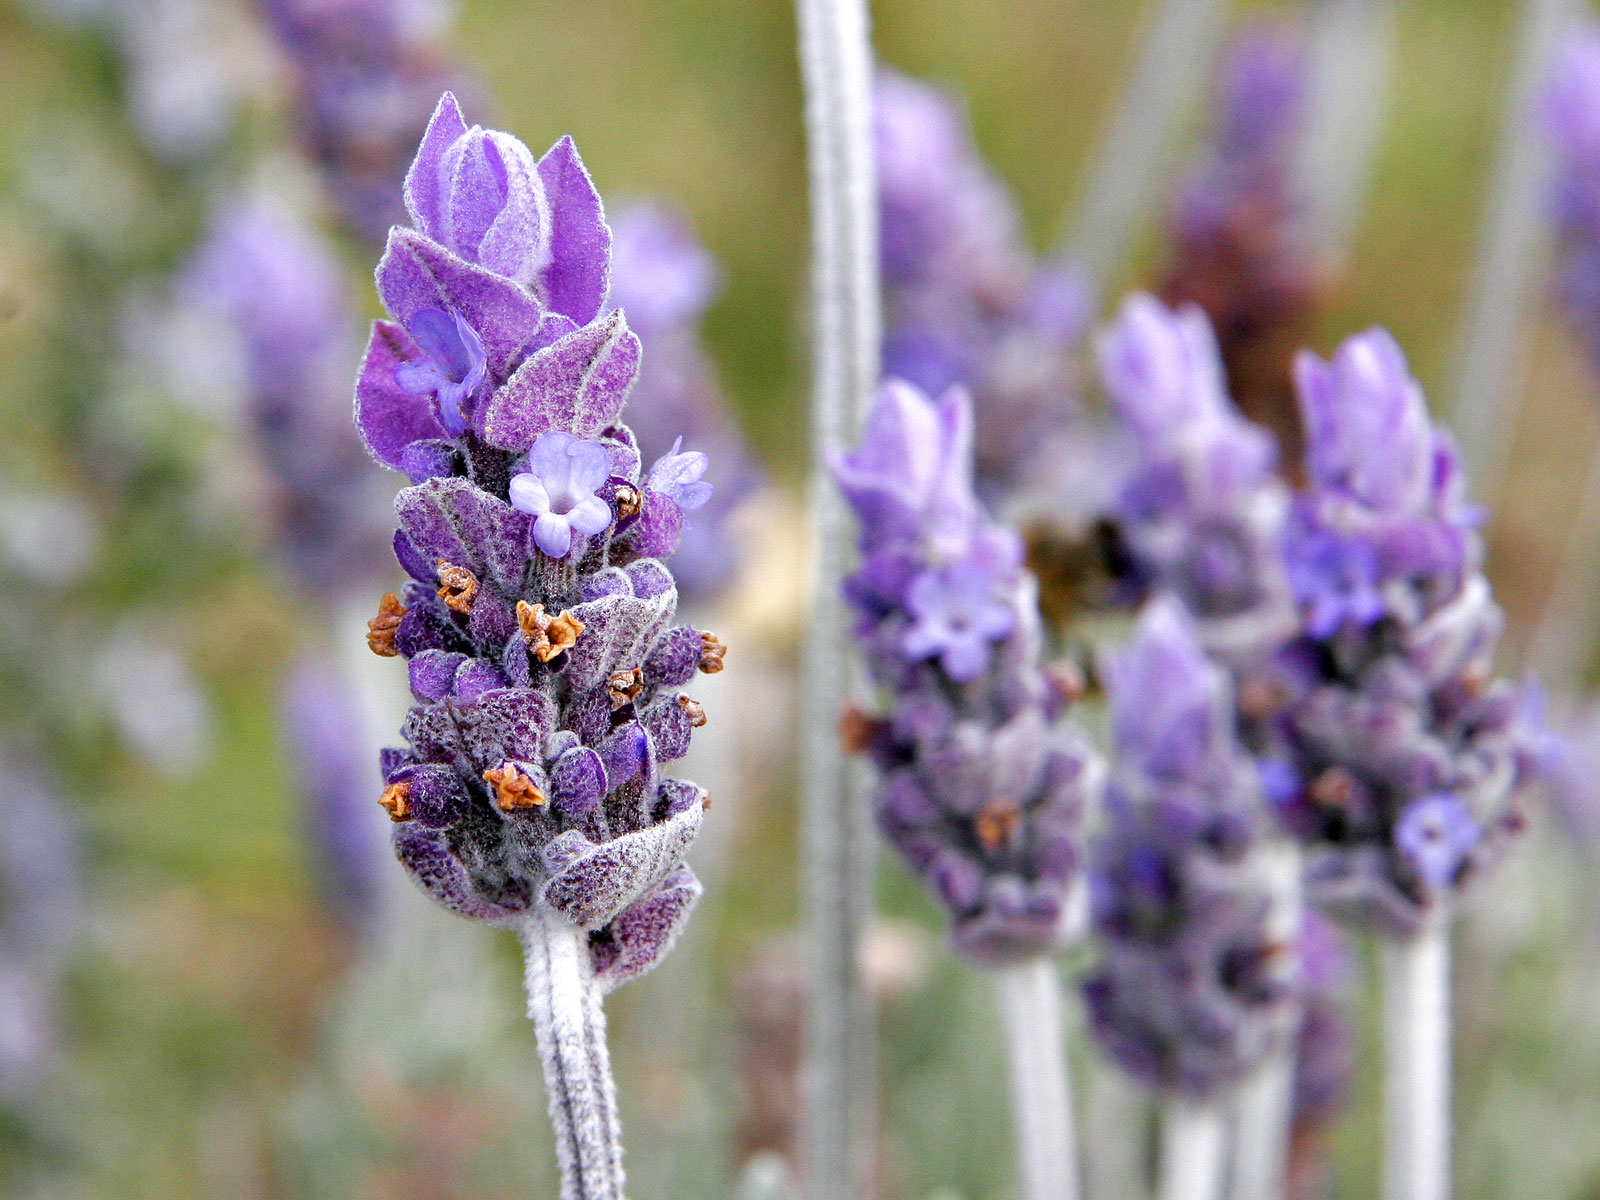 Single_lavendar_flower02